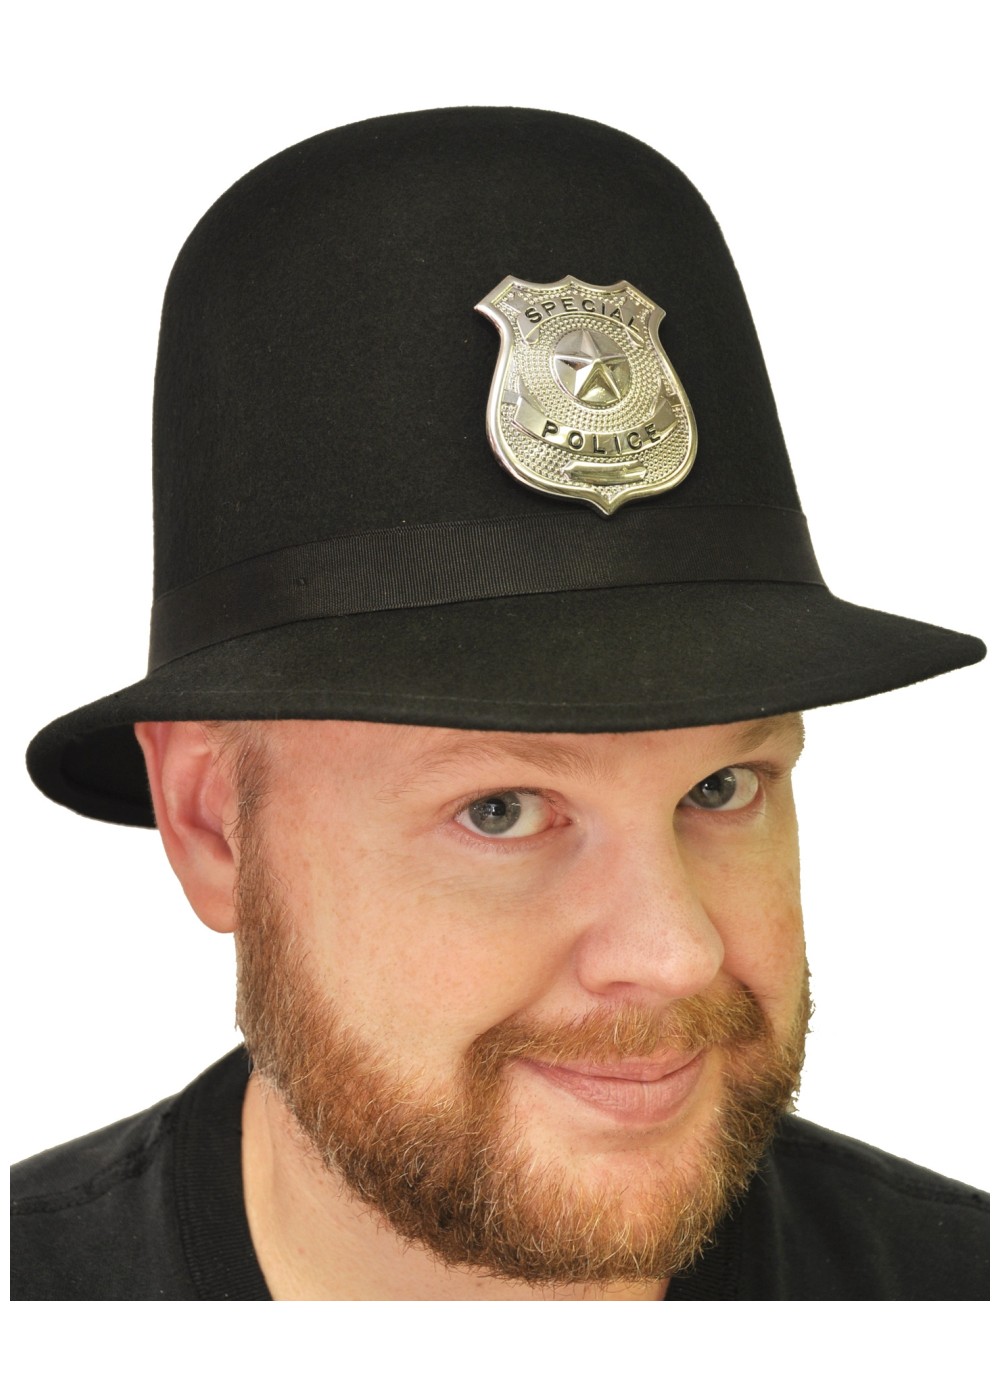  Keystone Cop Hat